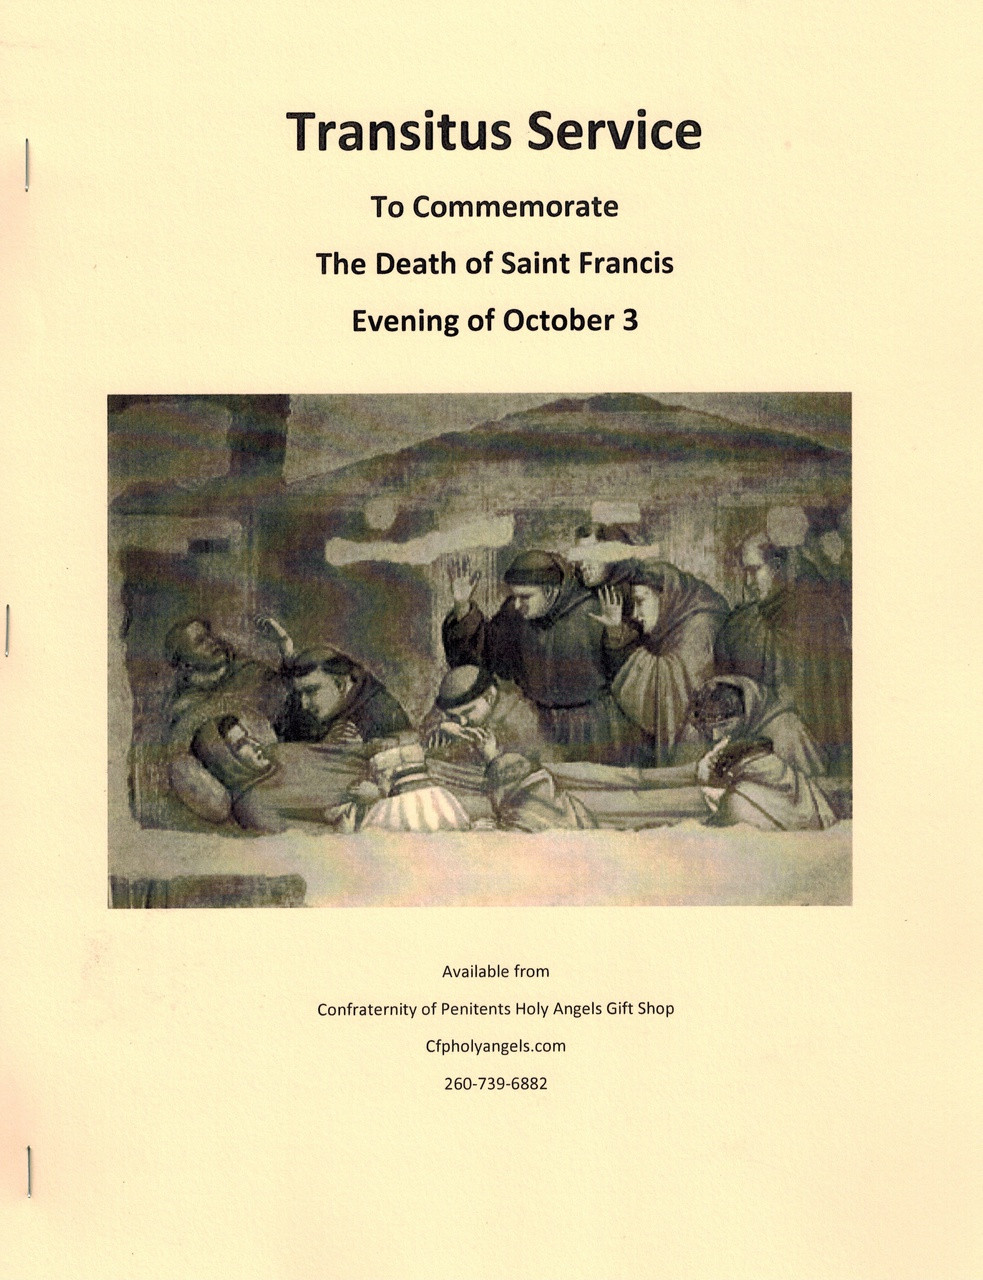 Transitus of Saint Francis Booklet